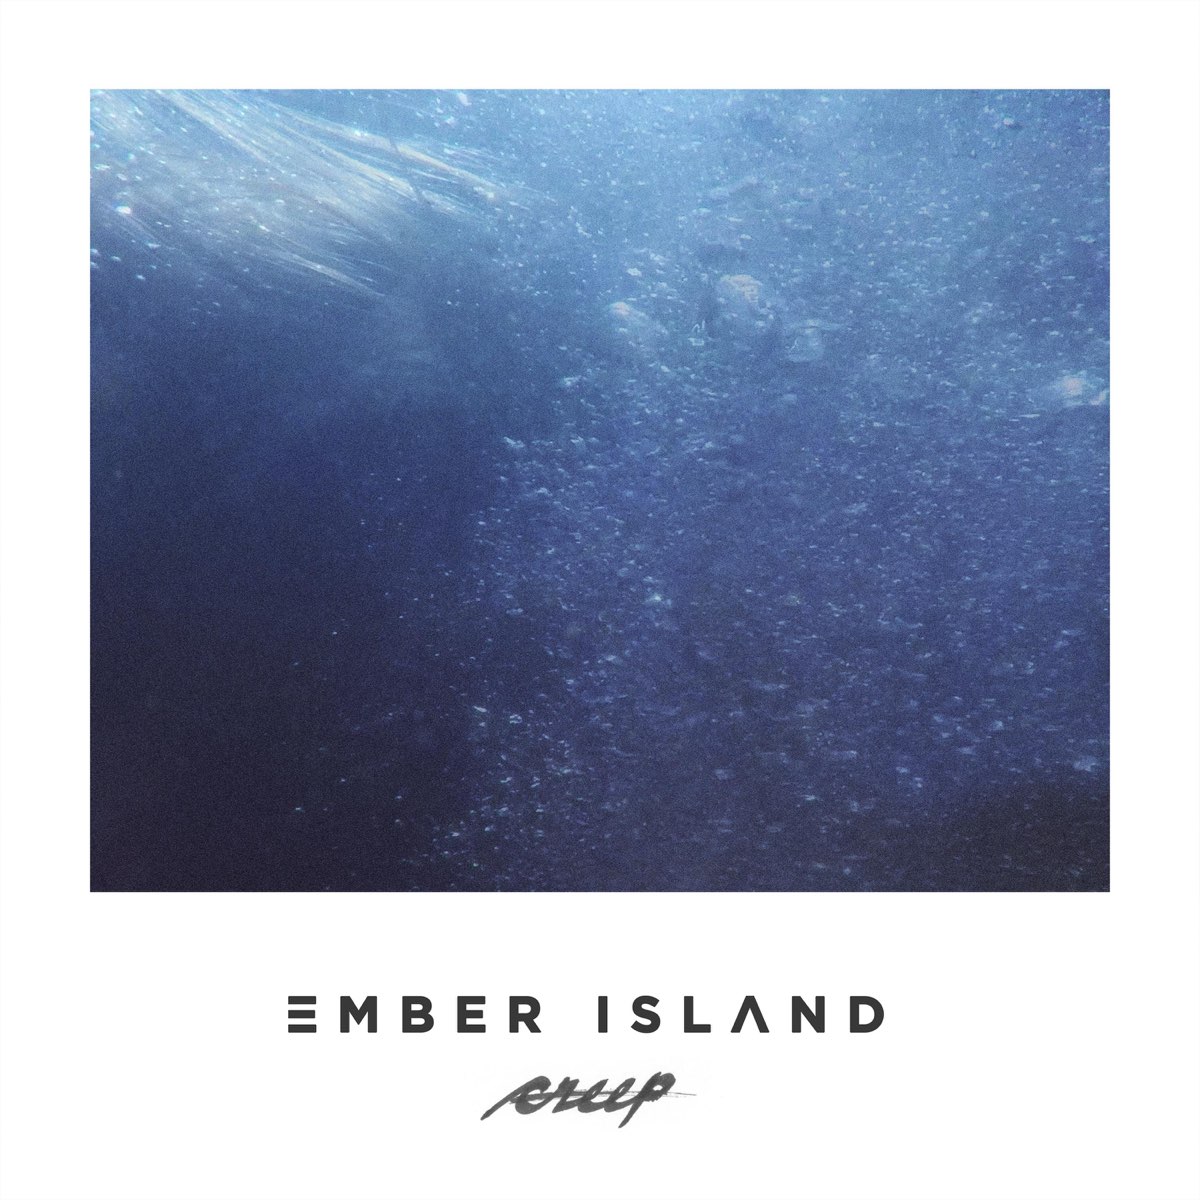 Ember island. Эмбер Исланд. Creep исполнитель. Ember Island x Radiohead - Creep (Thoreau Remix). Empire Island Creep.